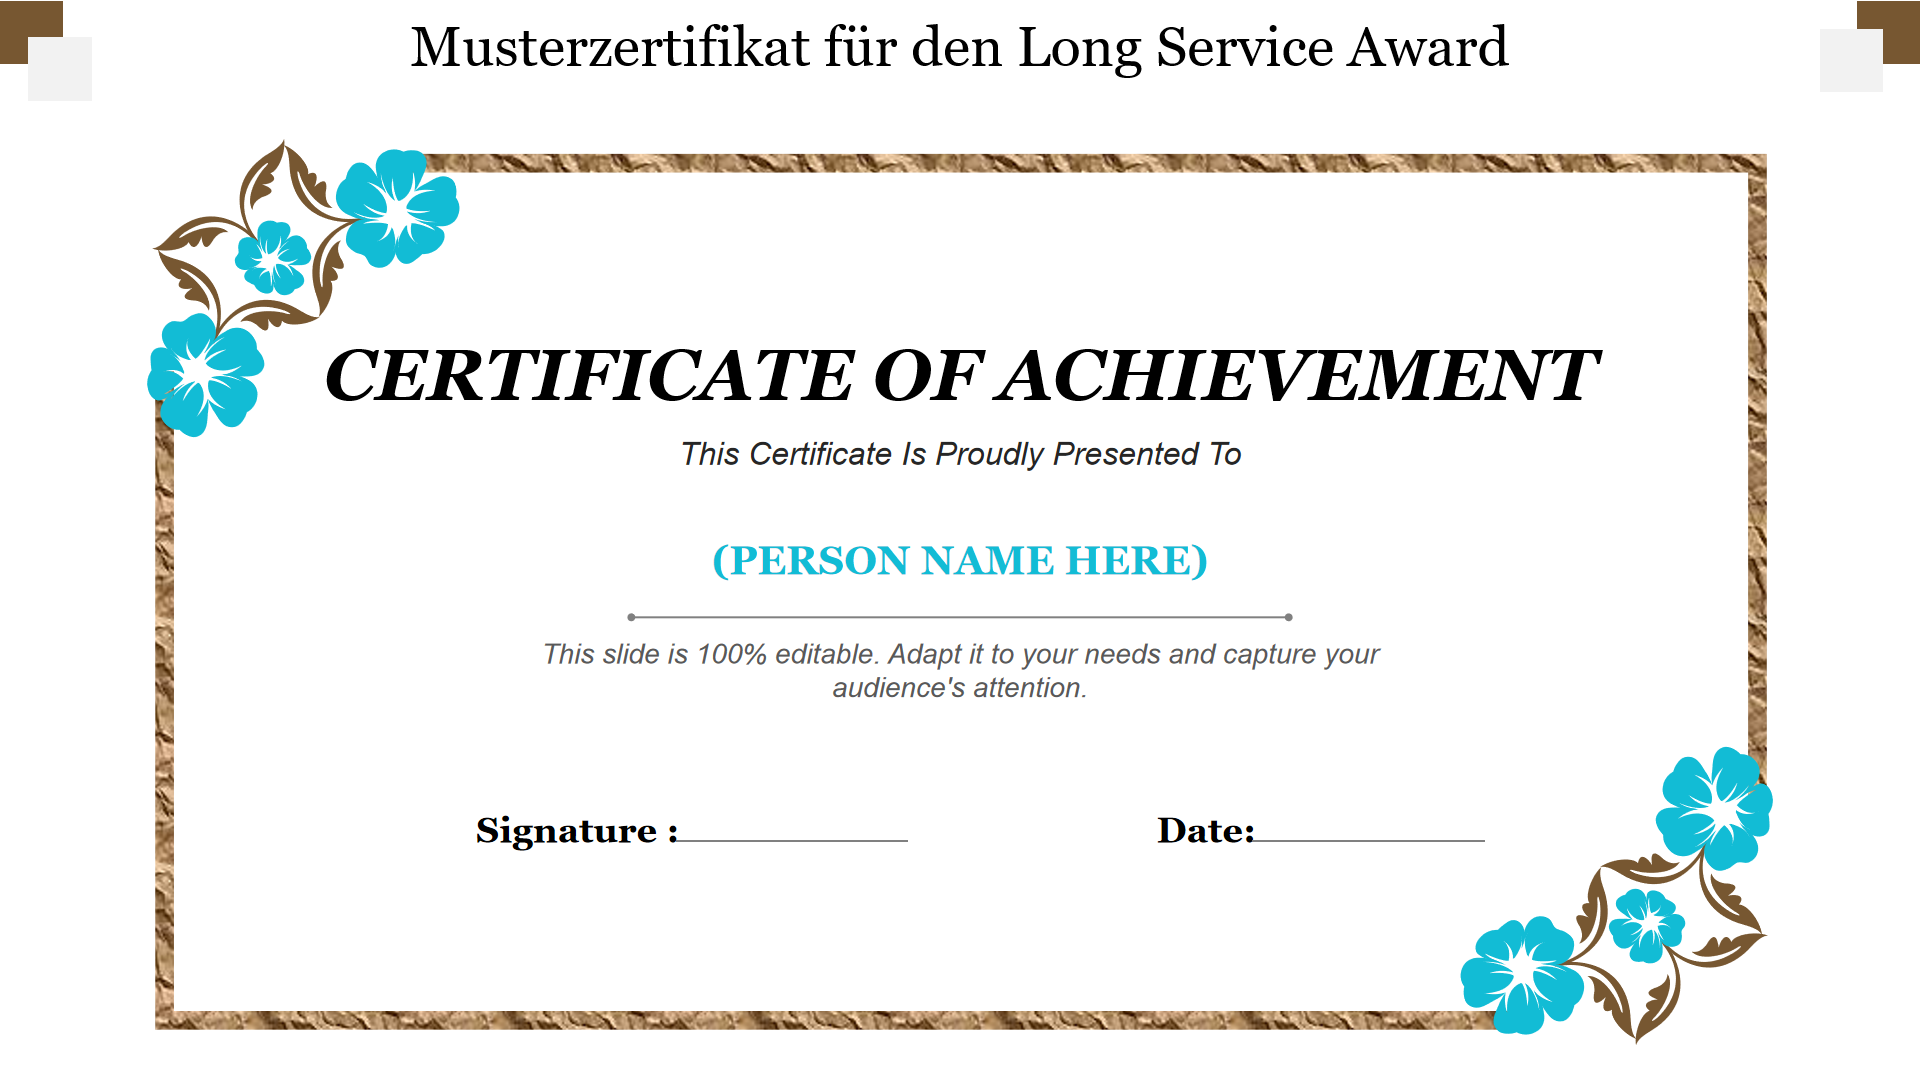 Musterzertifikat für den Long Service Award